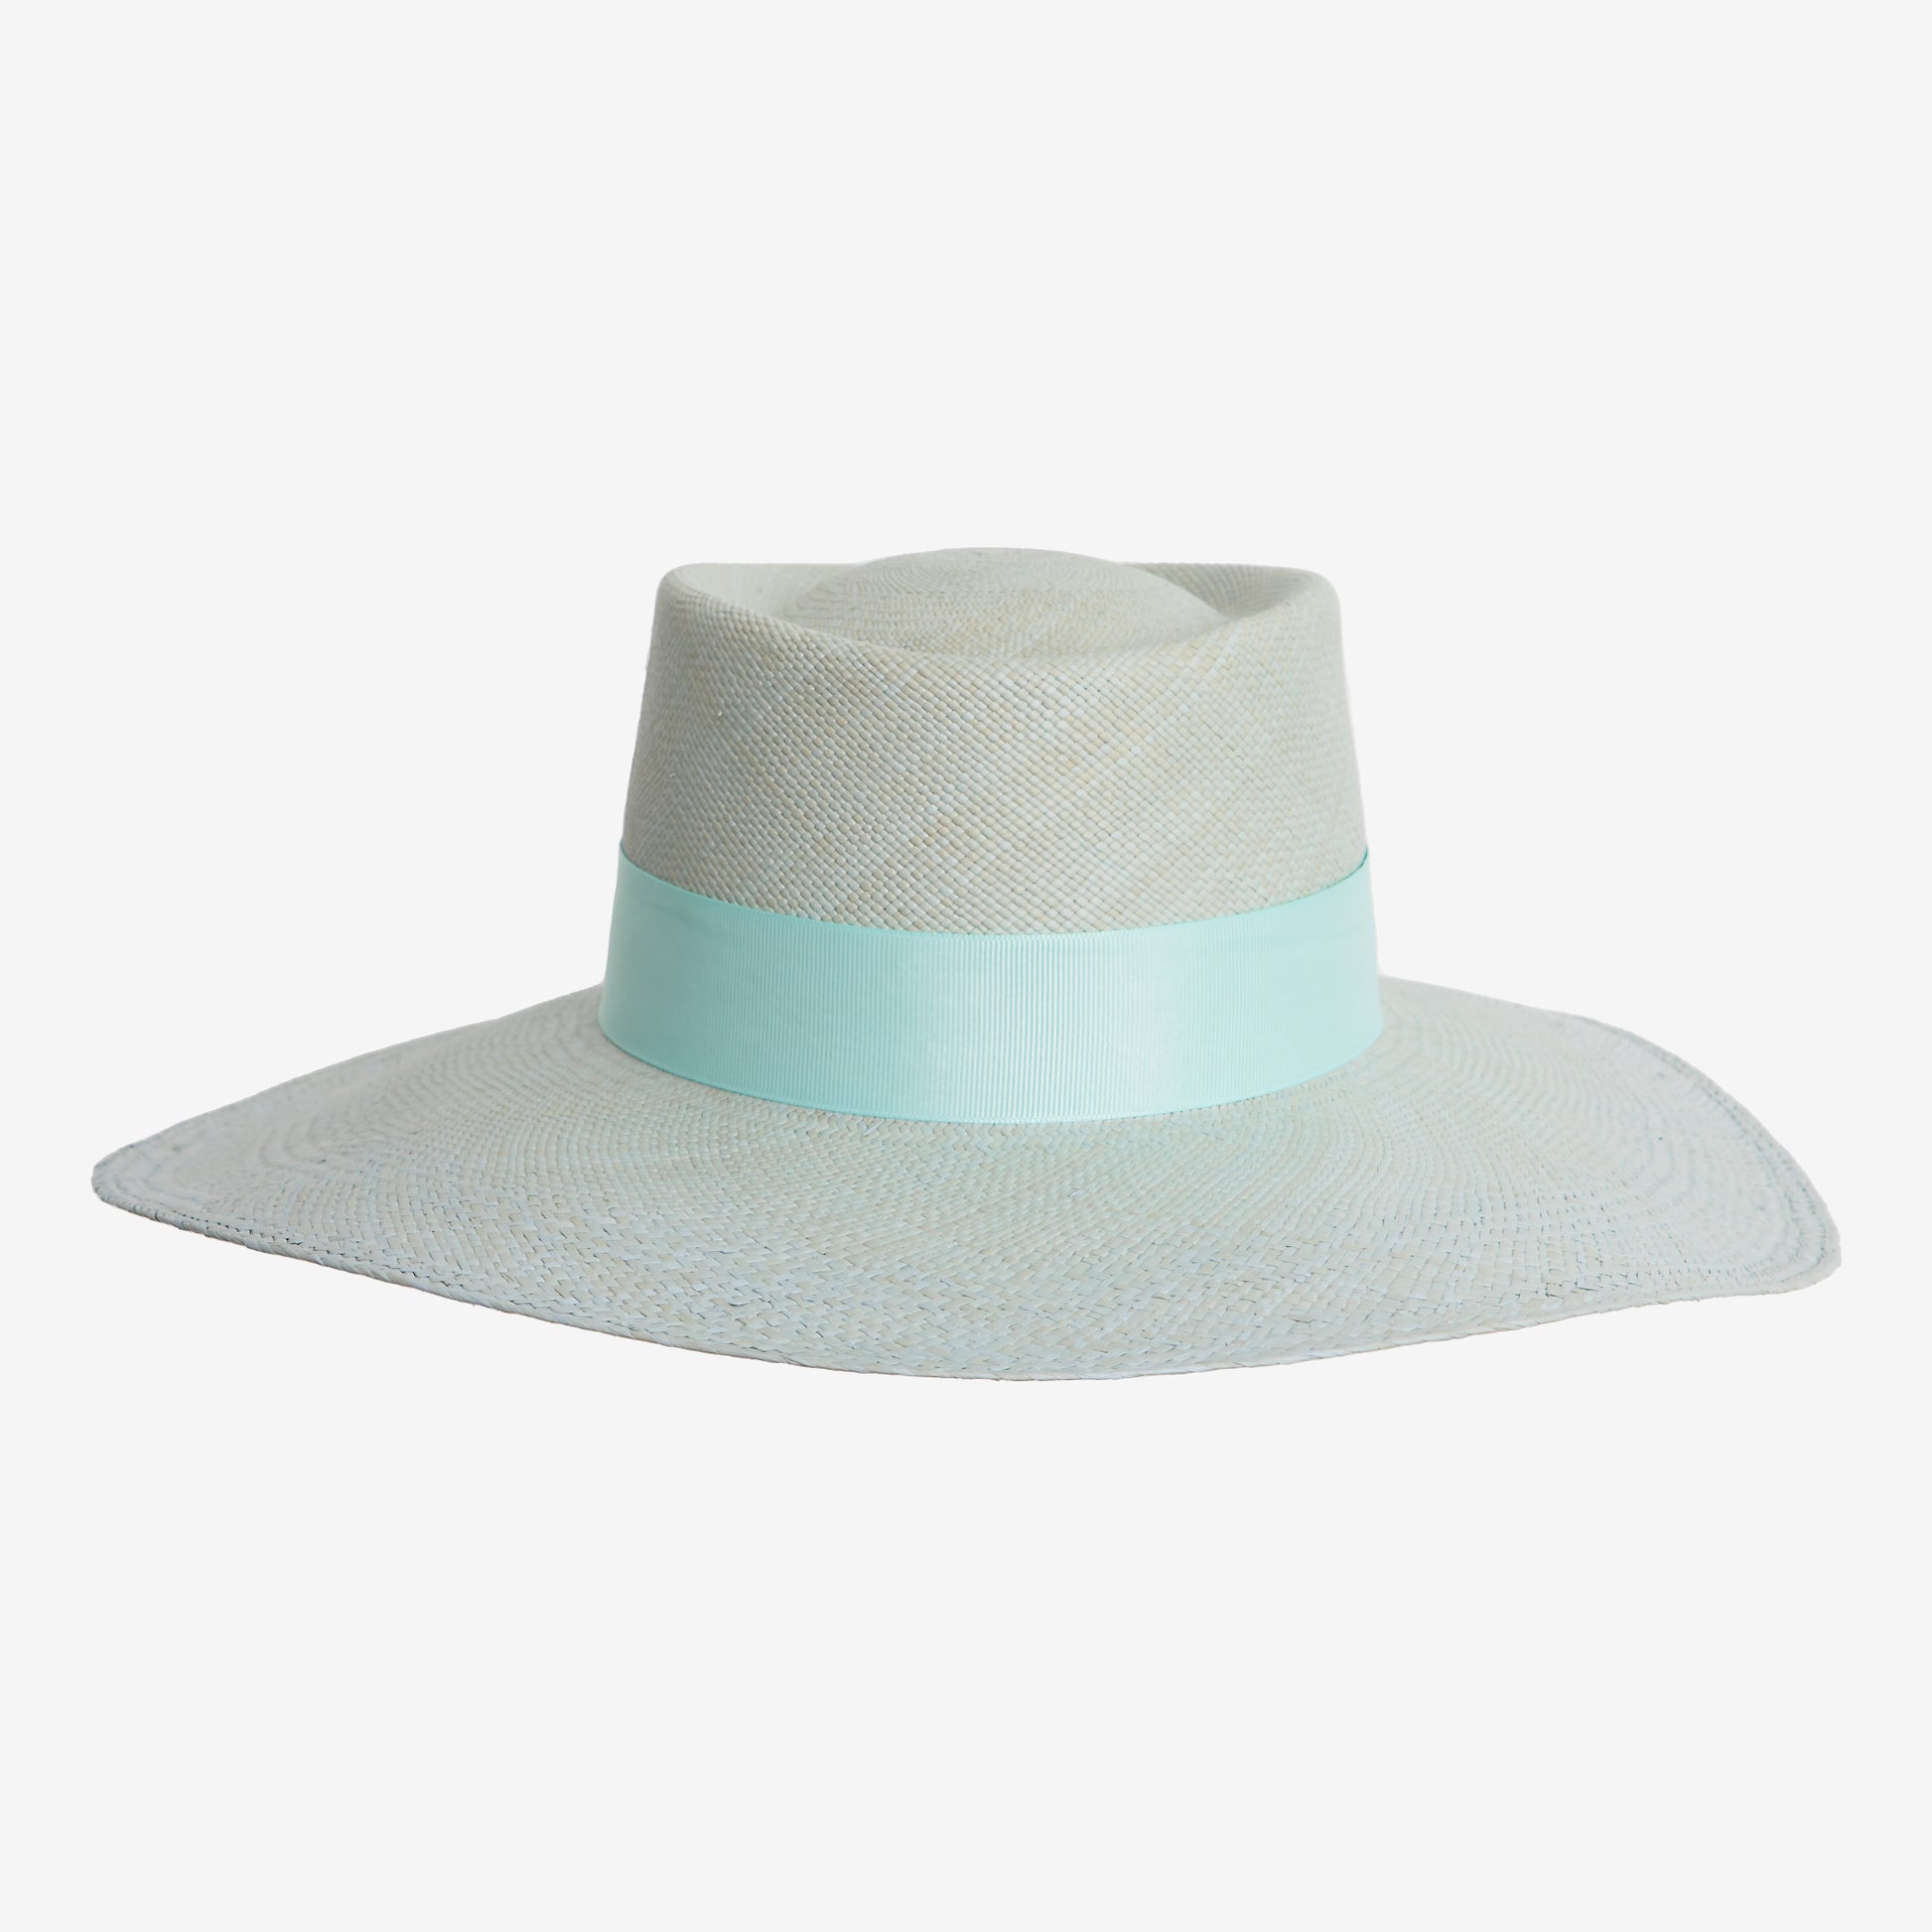 mindo-hats-the-aguadulce-pork-pie-straw-panama-hat-light-blue-front